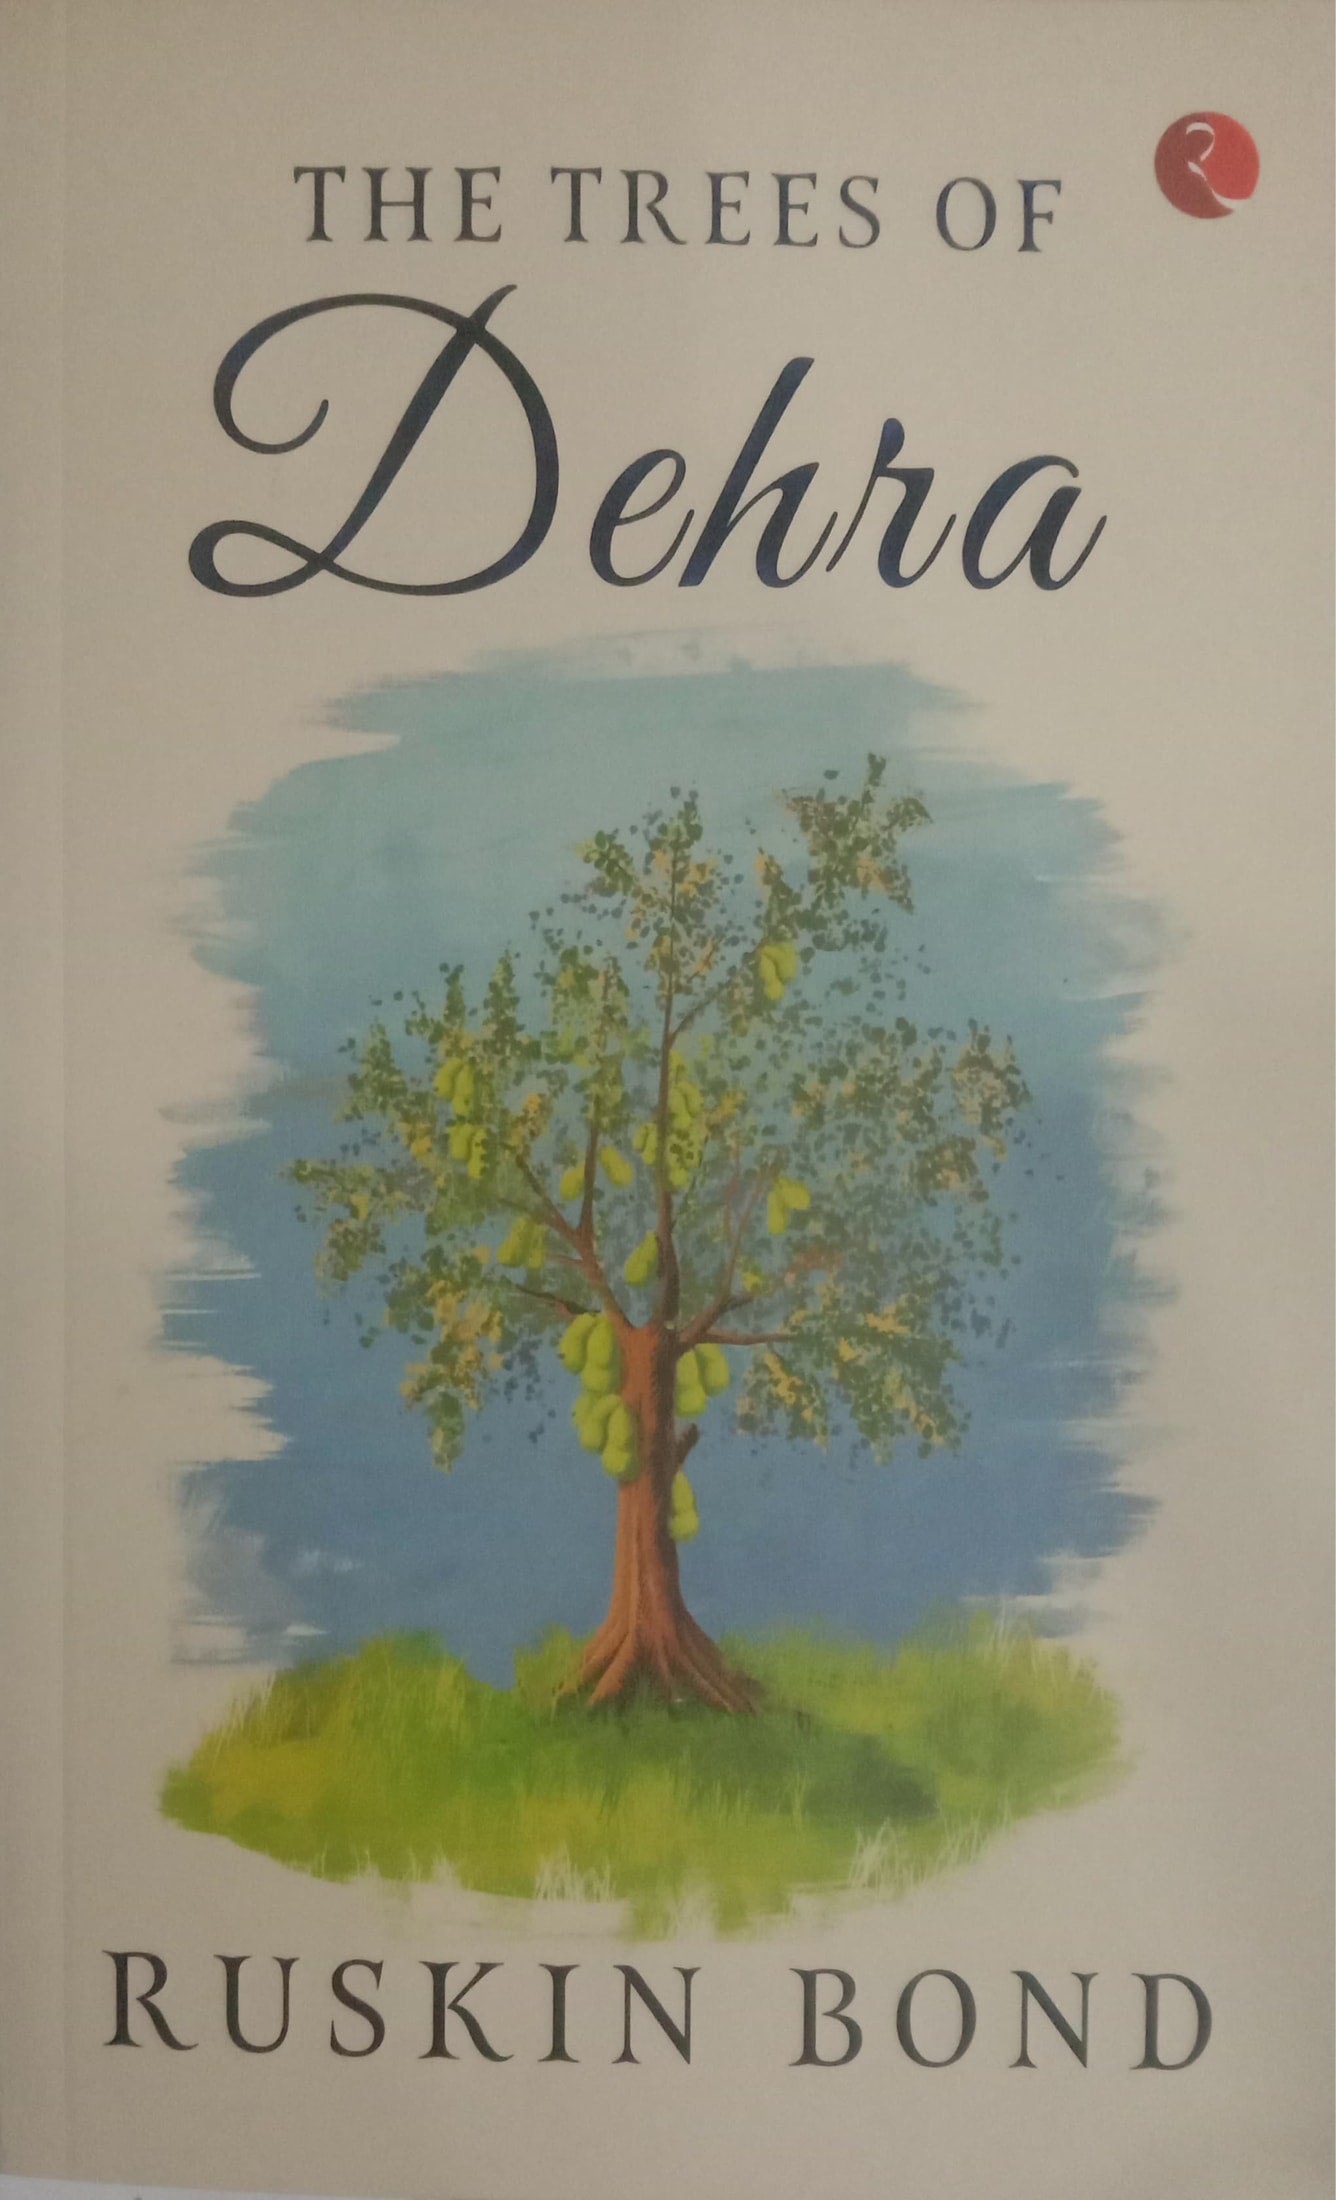 RUSKIN BOND - THE TREES OF DEHRA